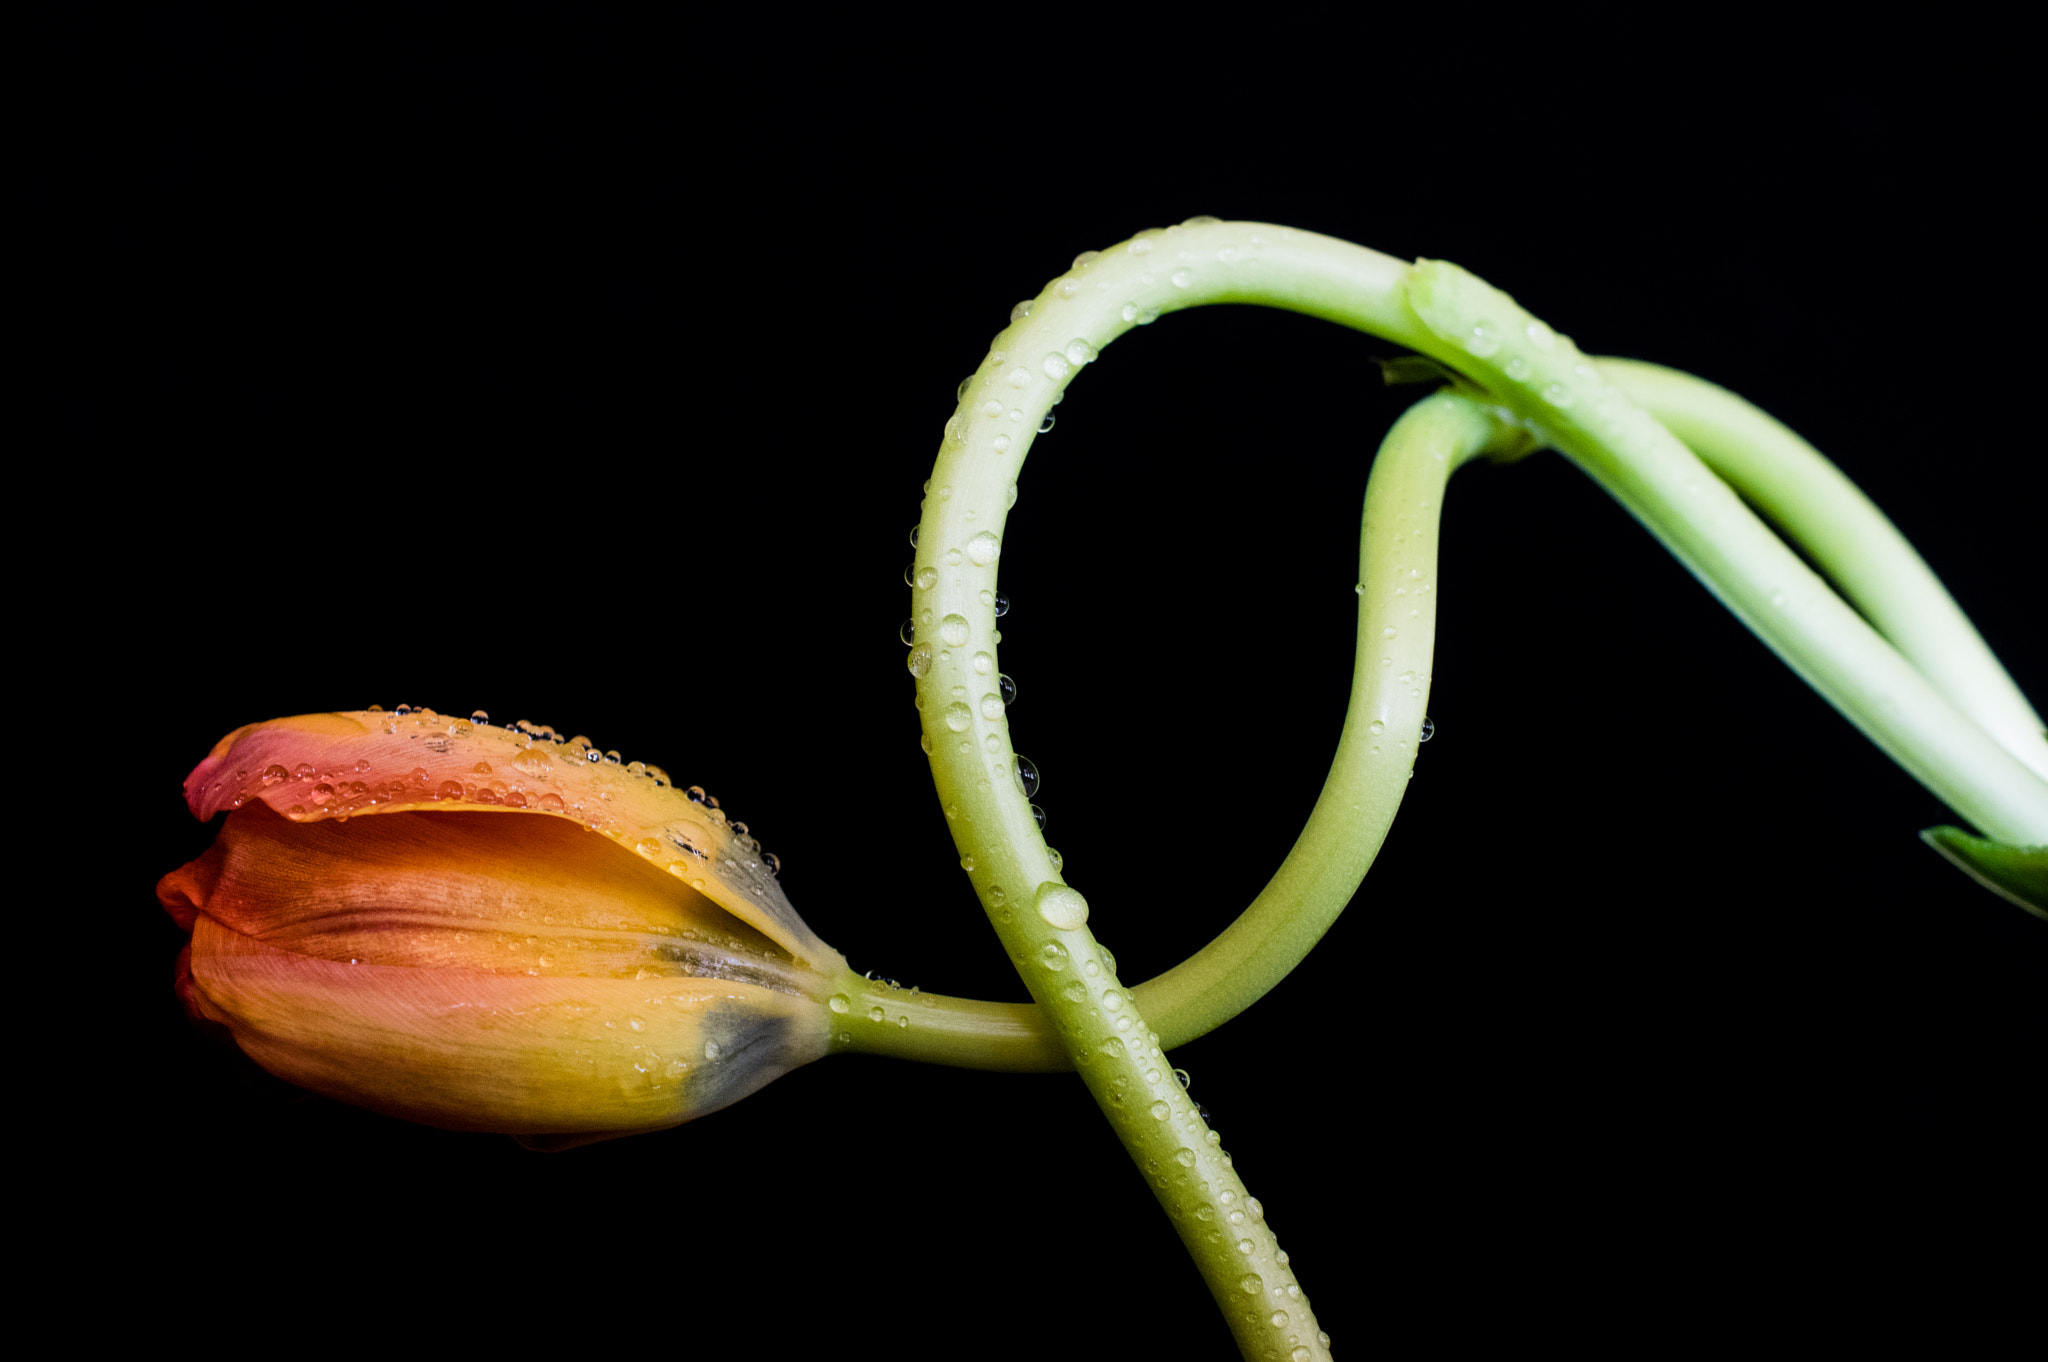 Pentax K-3 sample photo. Tulip photography